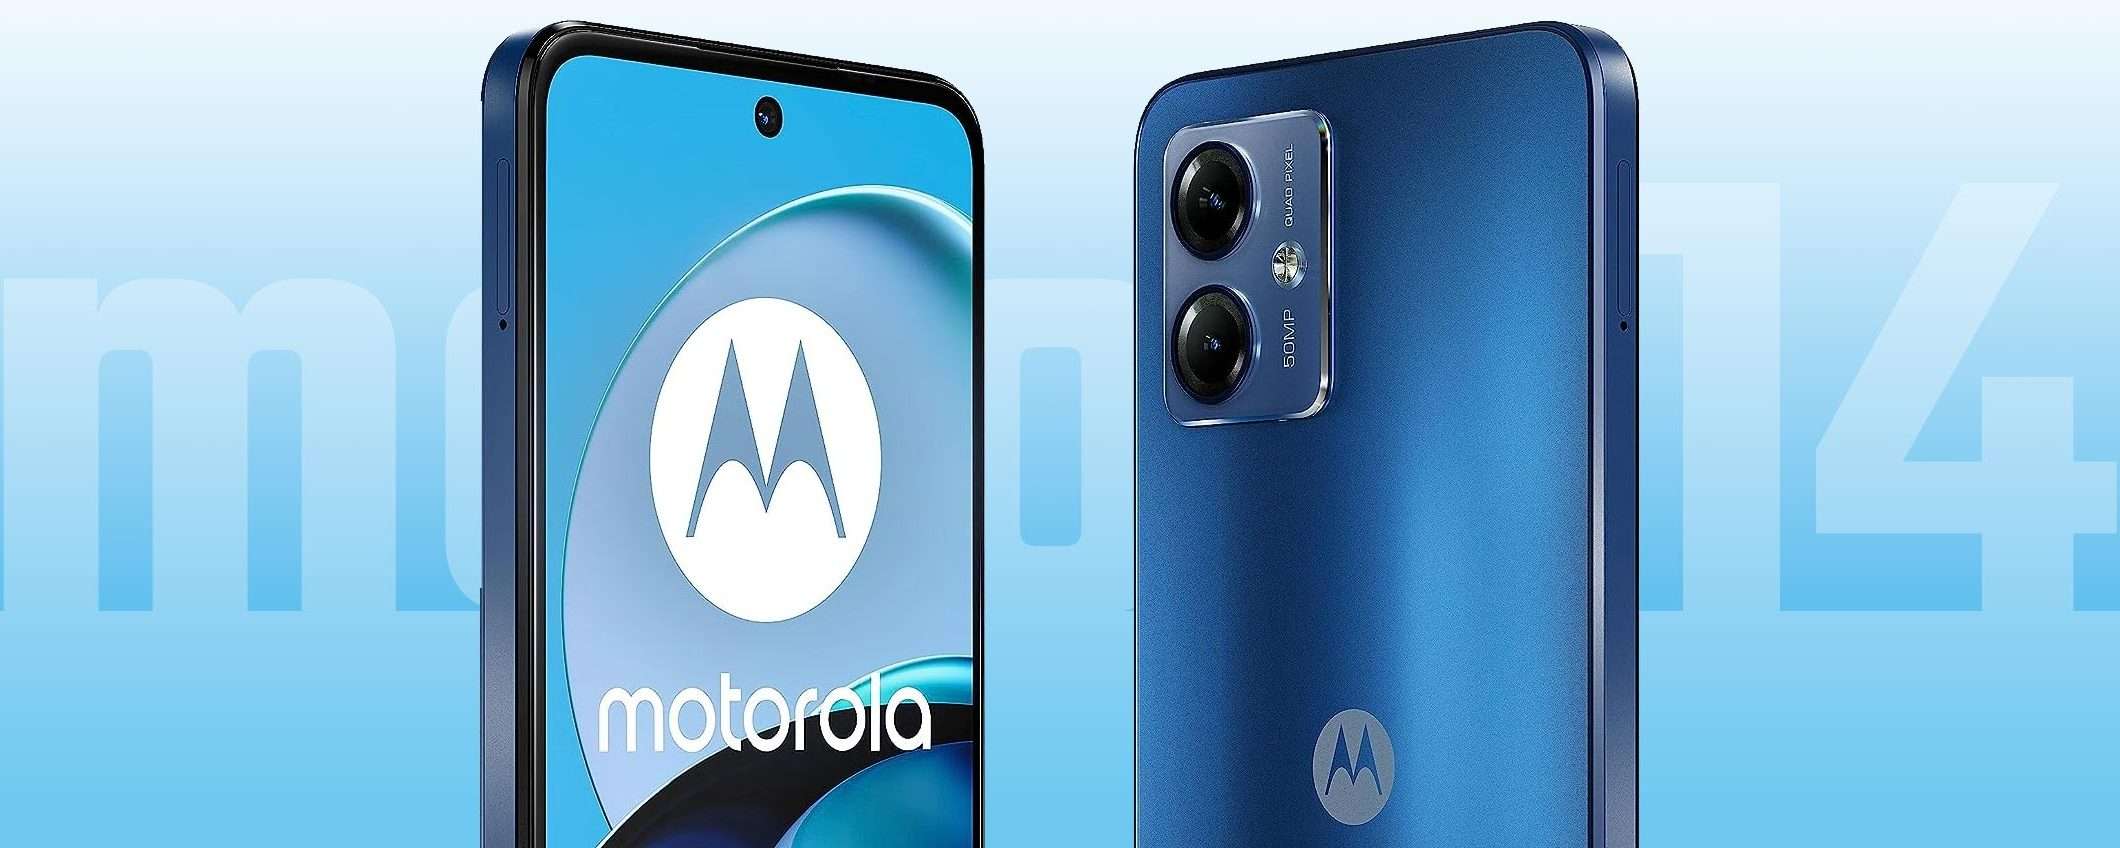 Lo smartphone Motorola a 89€ è l'AFFARE di oggi